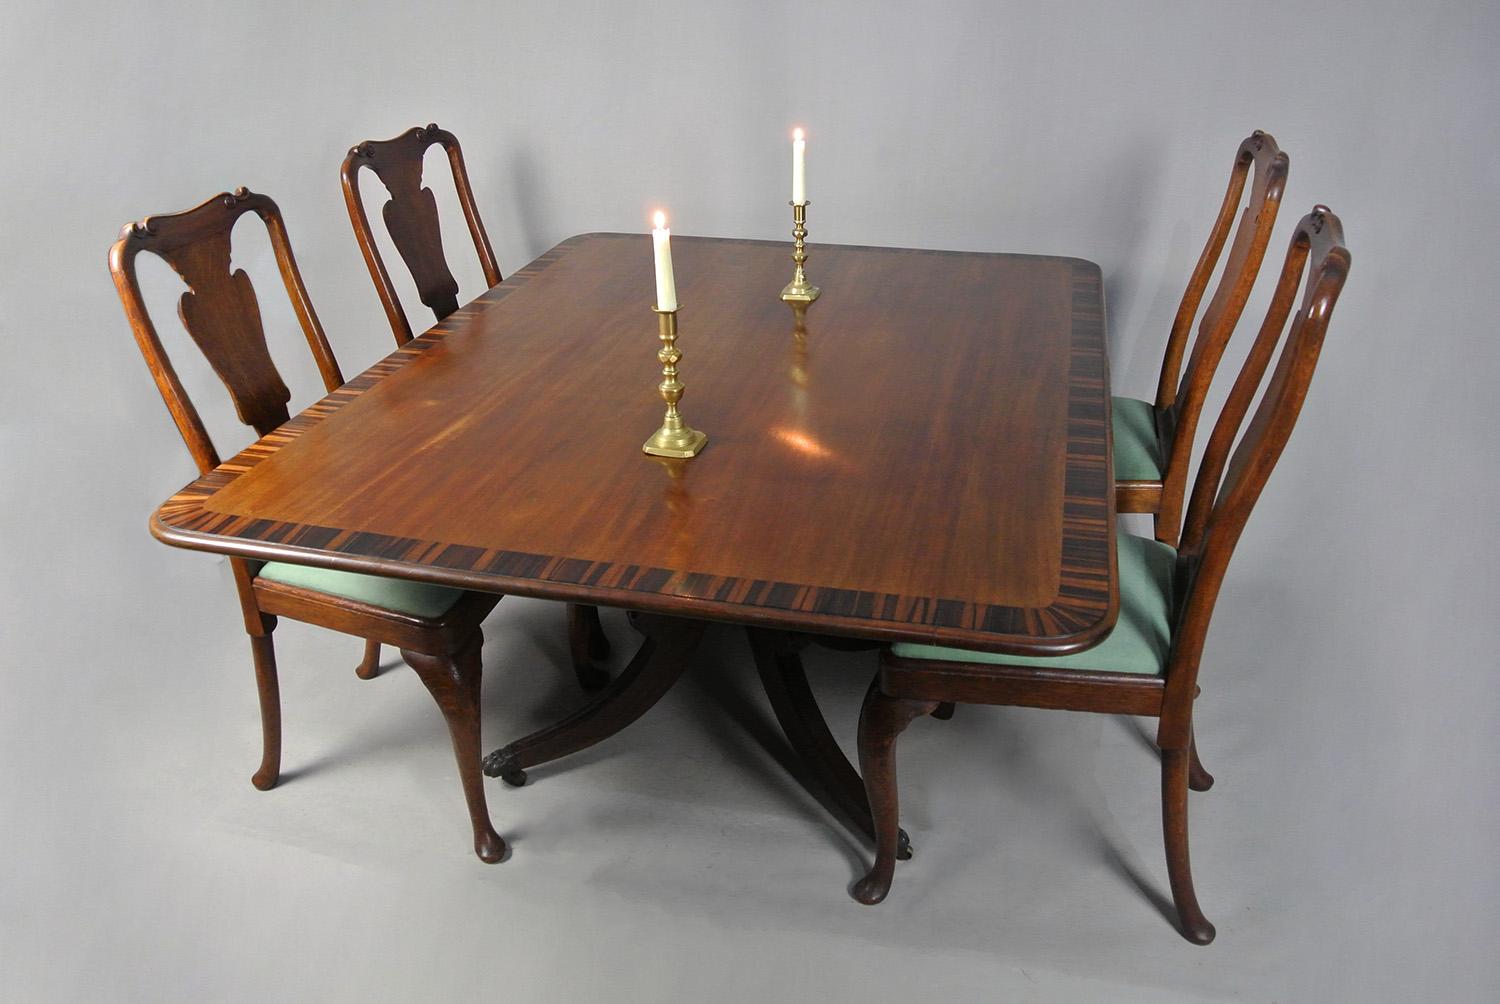 Regency Tilt Top Supper Table with Coromandel Crossbanding c. 1820 For Sale 1